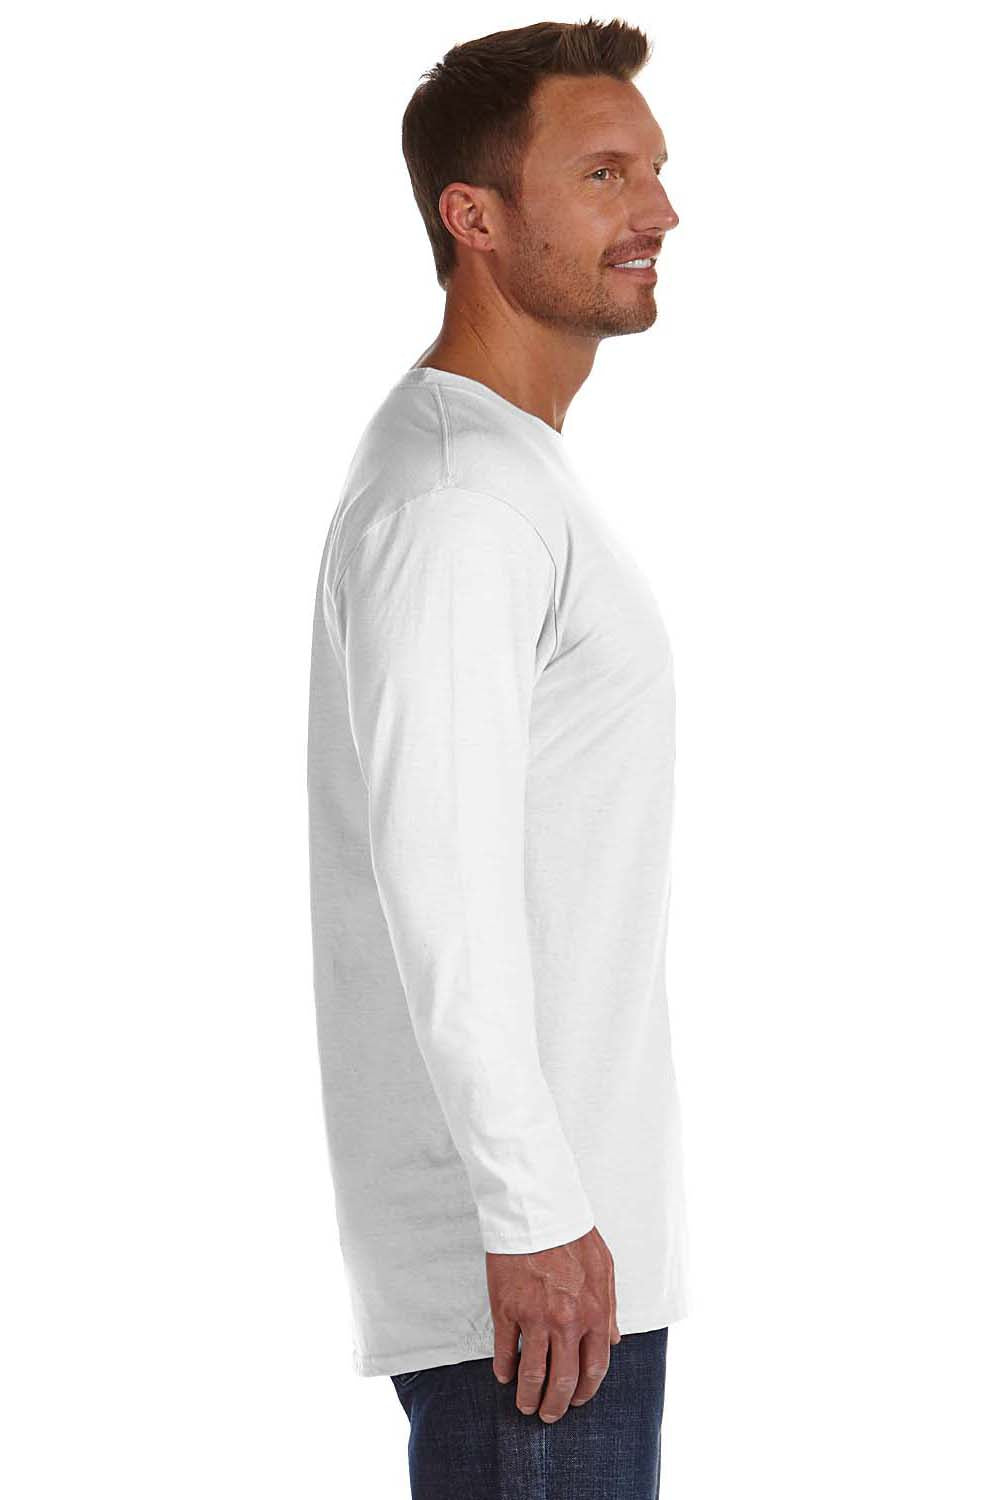 Hanes 498L Mens Nano-T Long Sleeve Crewneck T-Shirt White Side